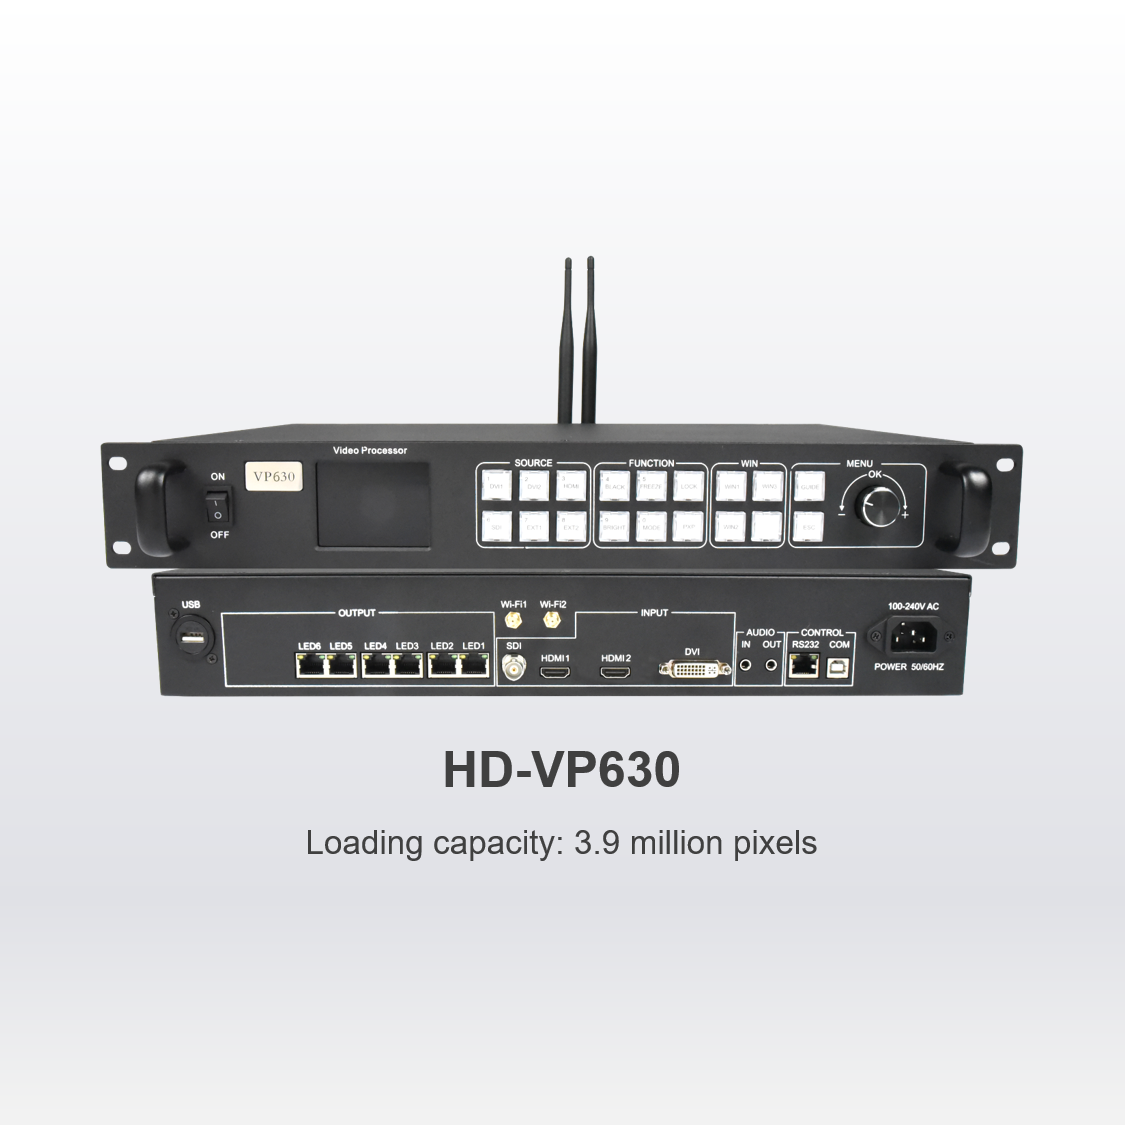 HD-VP630